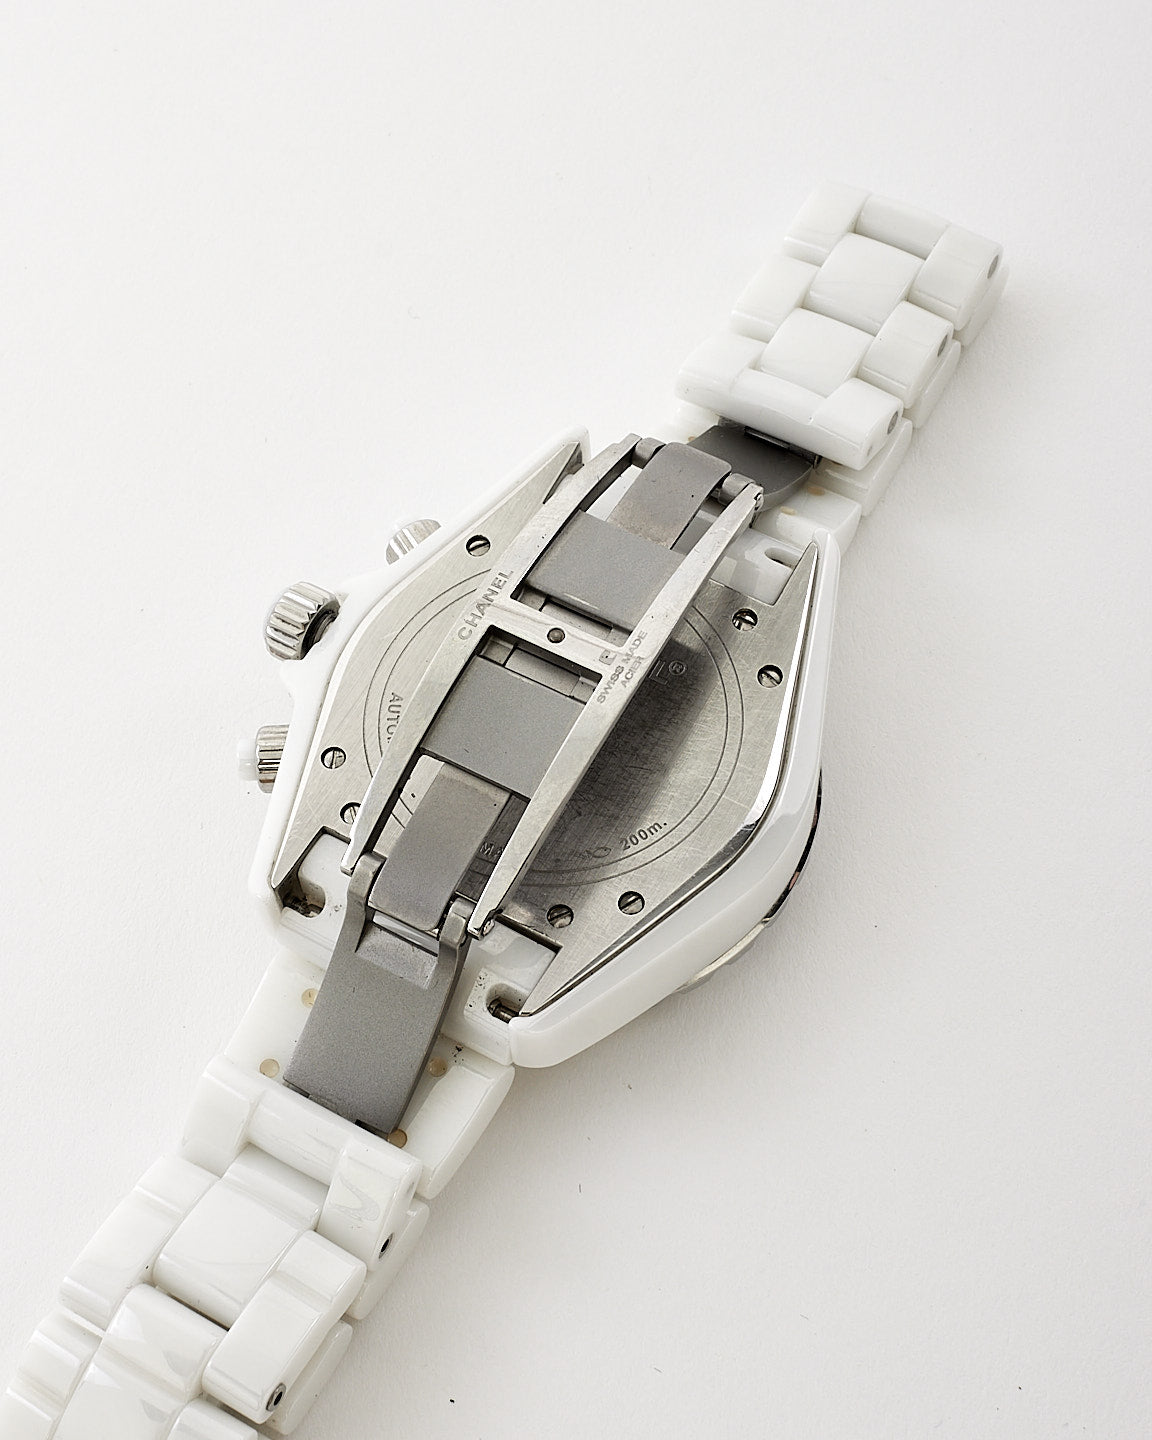 Chanel White Ceramic J12 Automatic Movement 41mm Watch